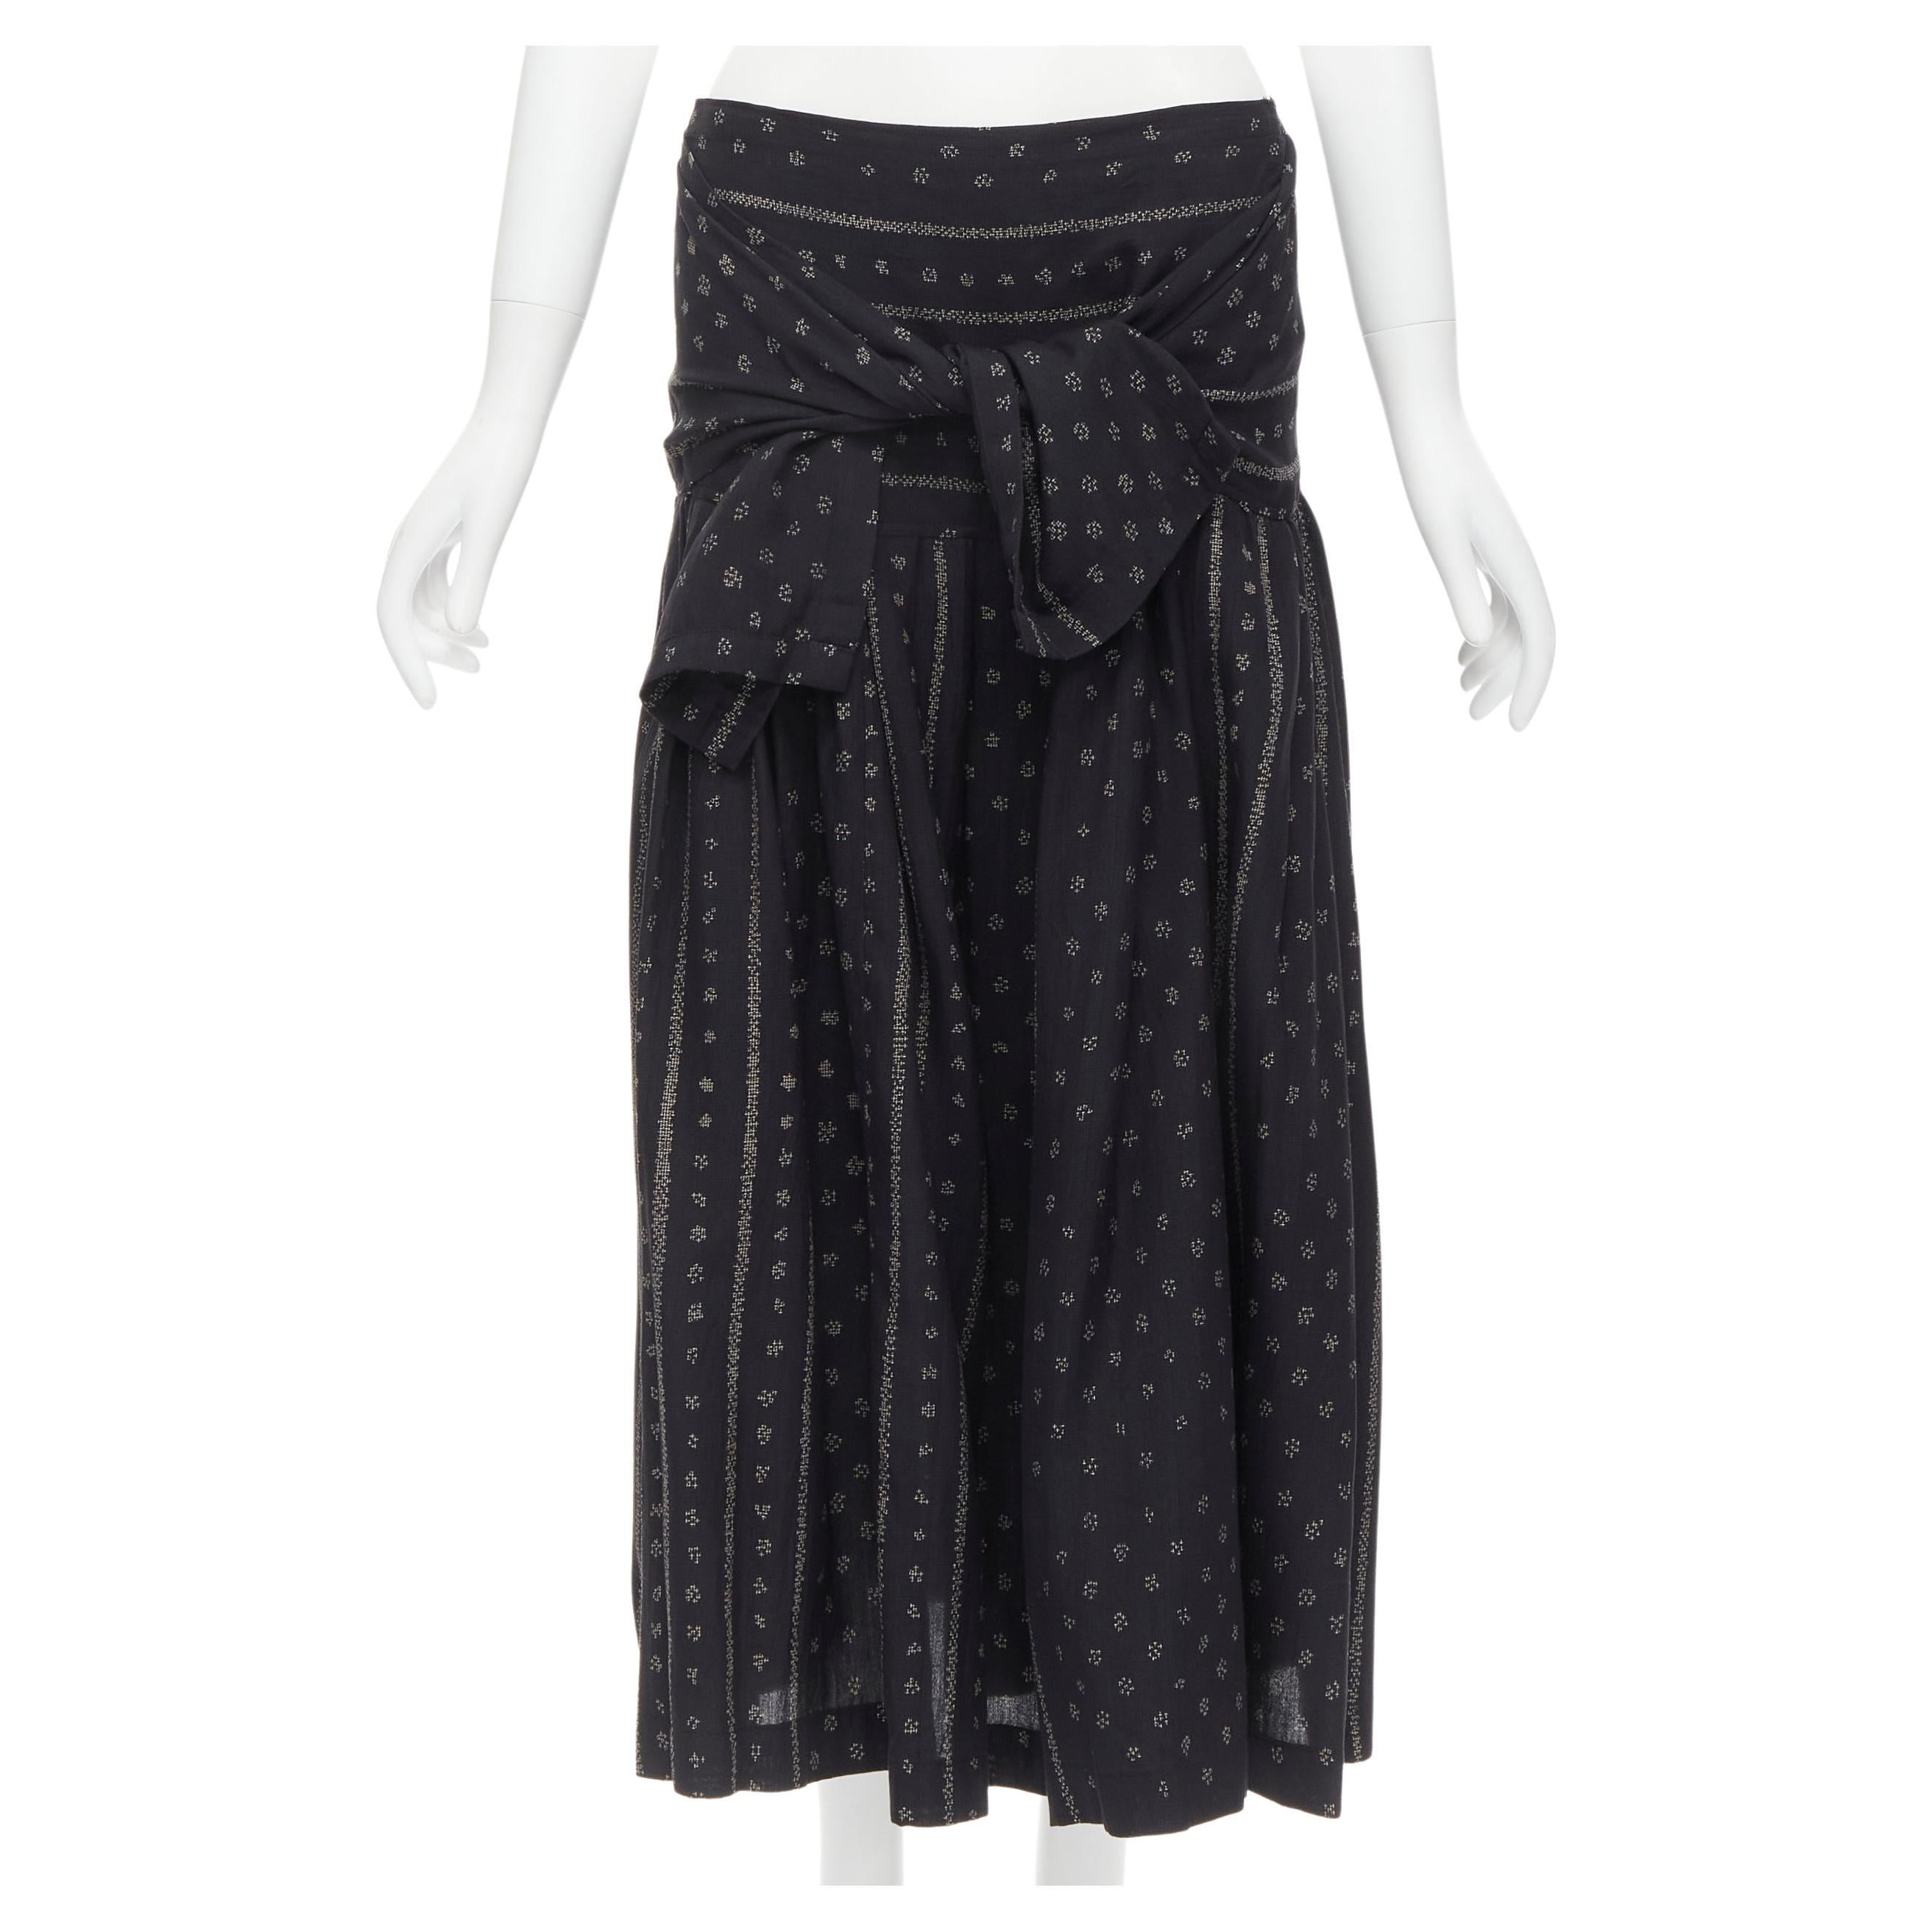 TRICOT COMME DES GARCONS black Ethnic Bohemian floral jacquard flared skirt S For Sale